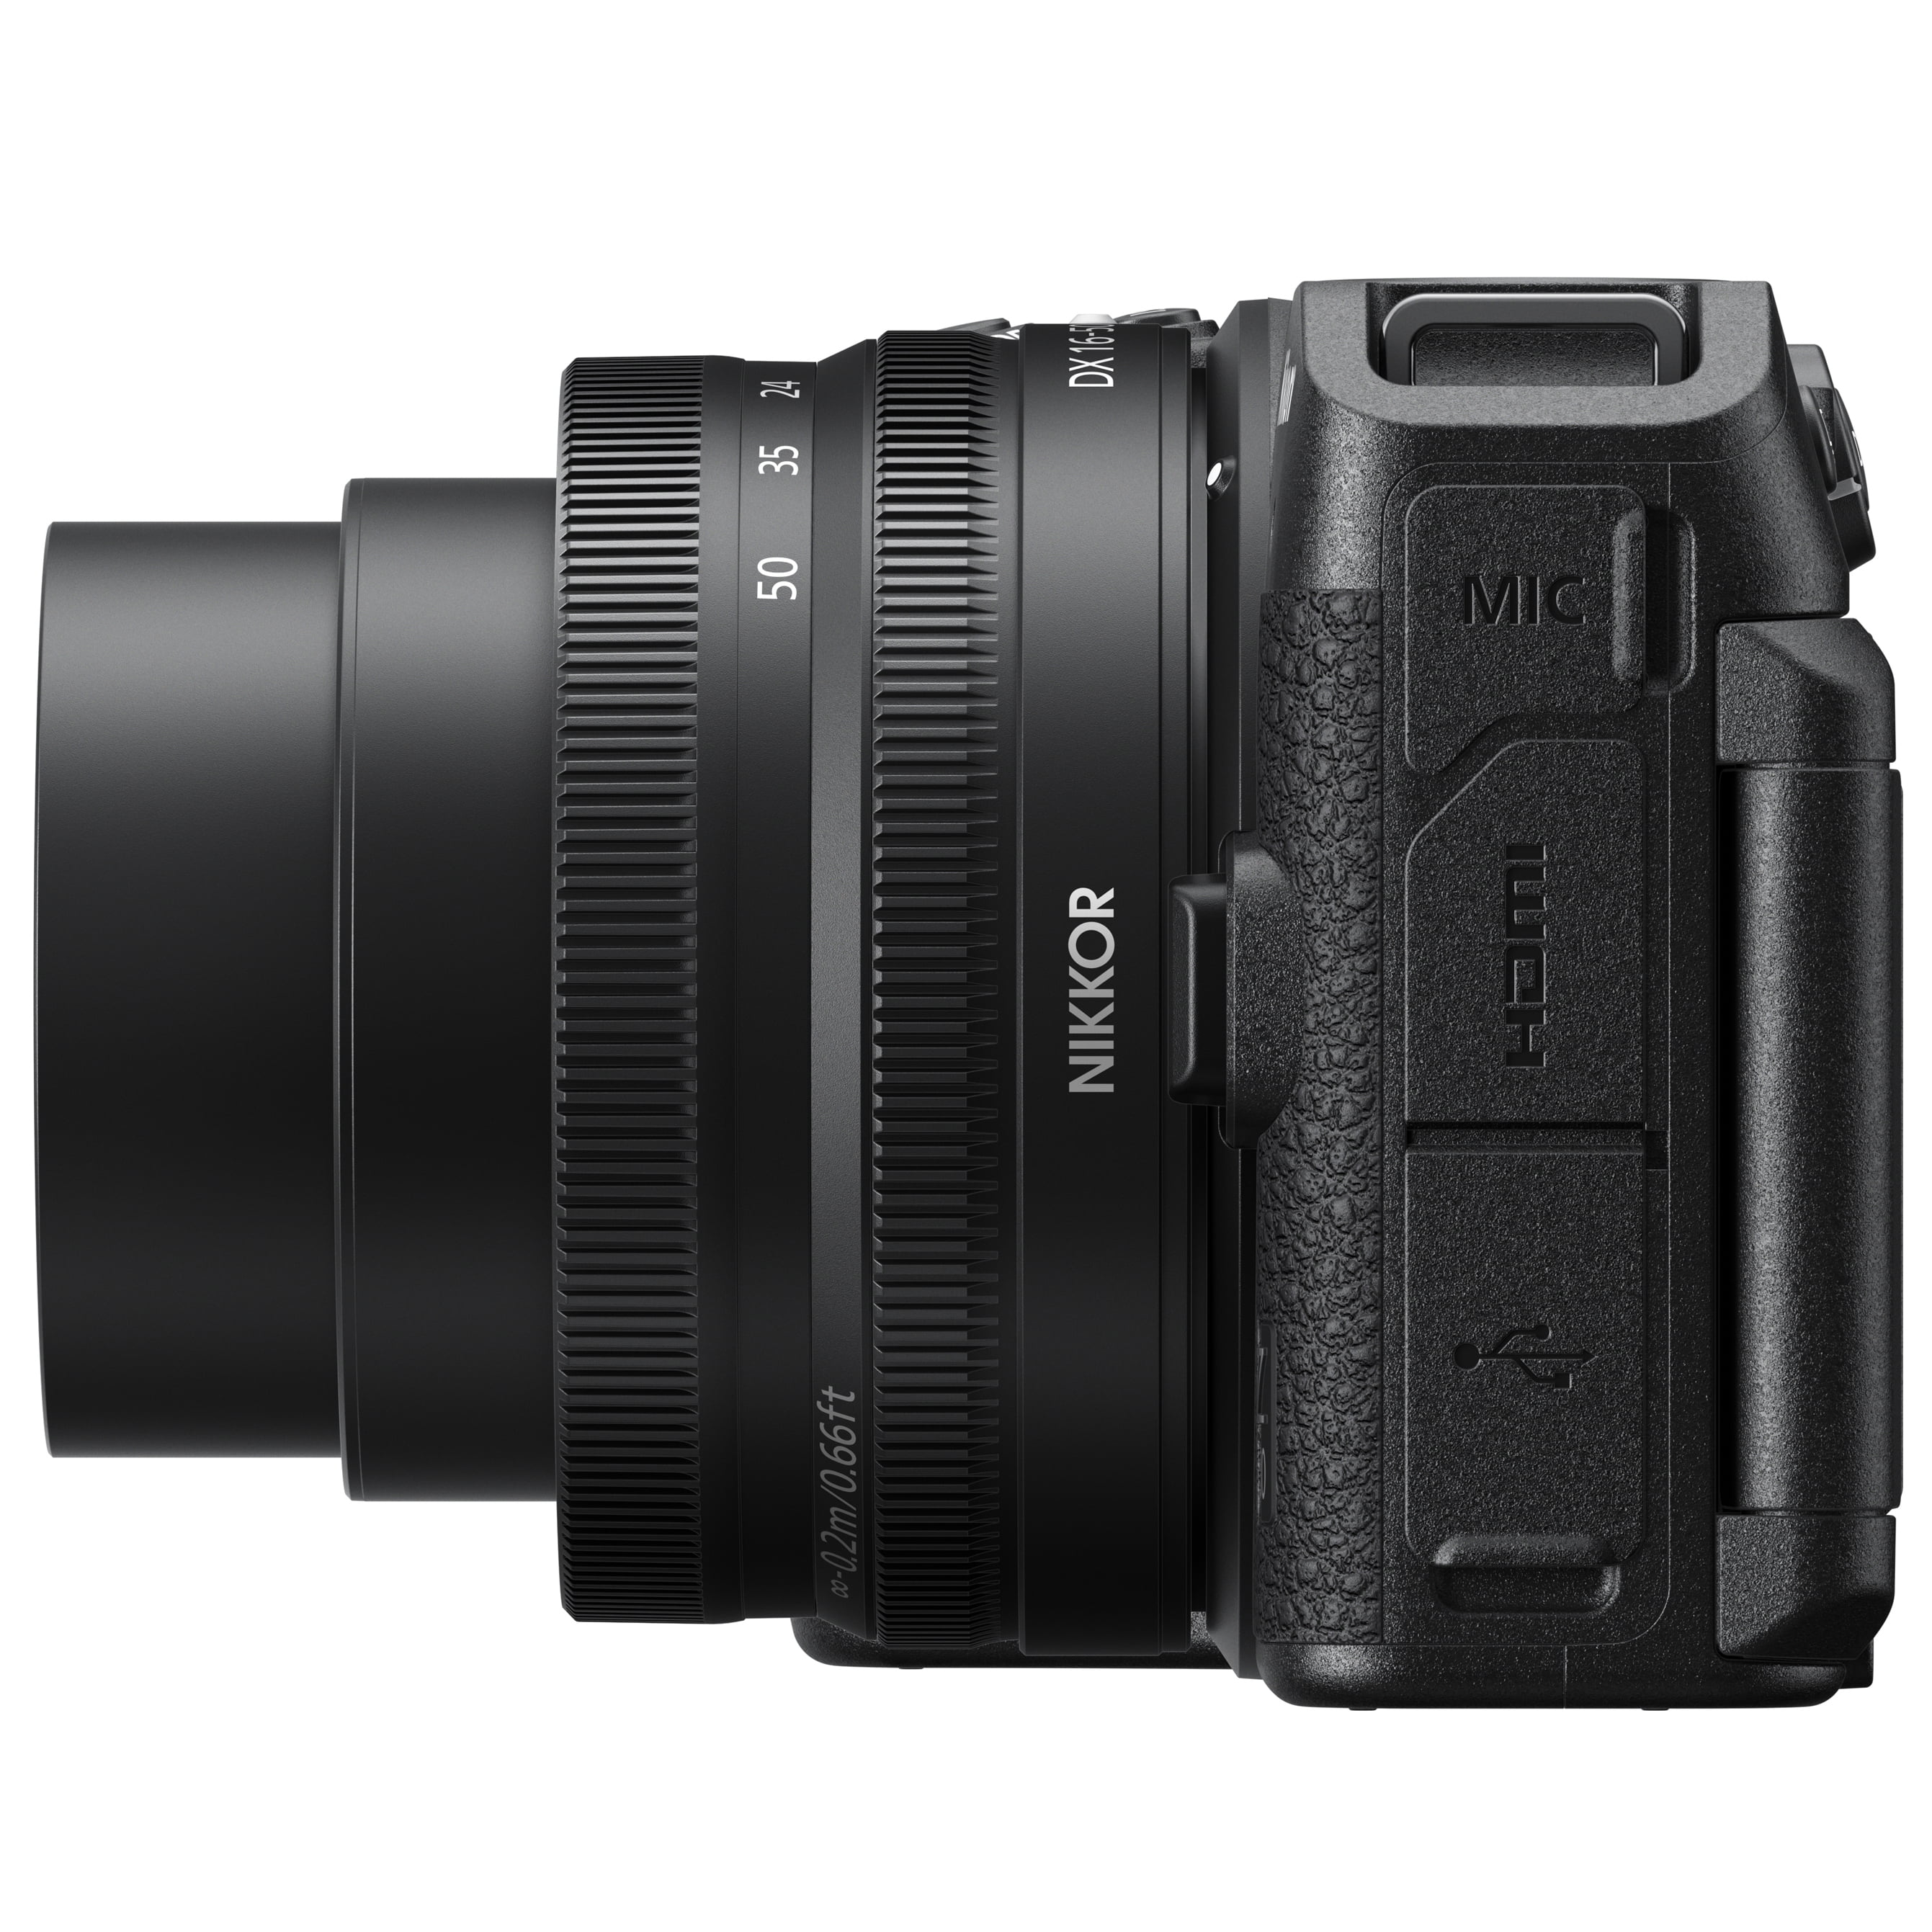 Nikon Z30 Mirrorless Camera Body 4K UHD DX-Format with NIKKOR Z DX 